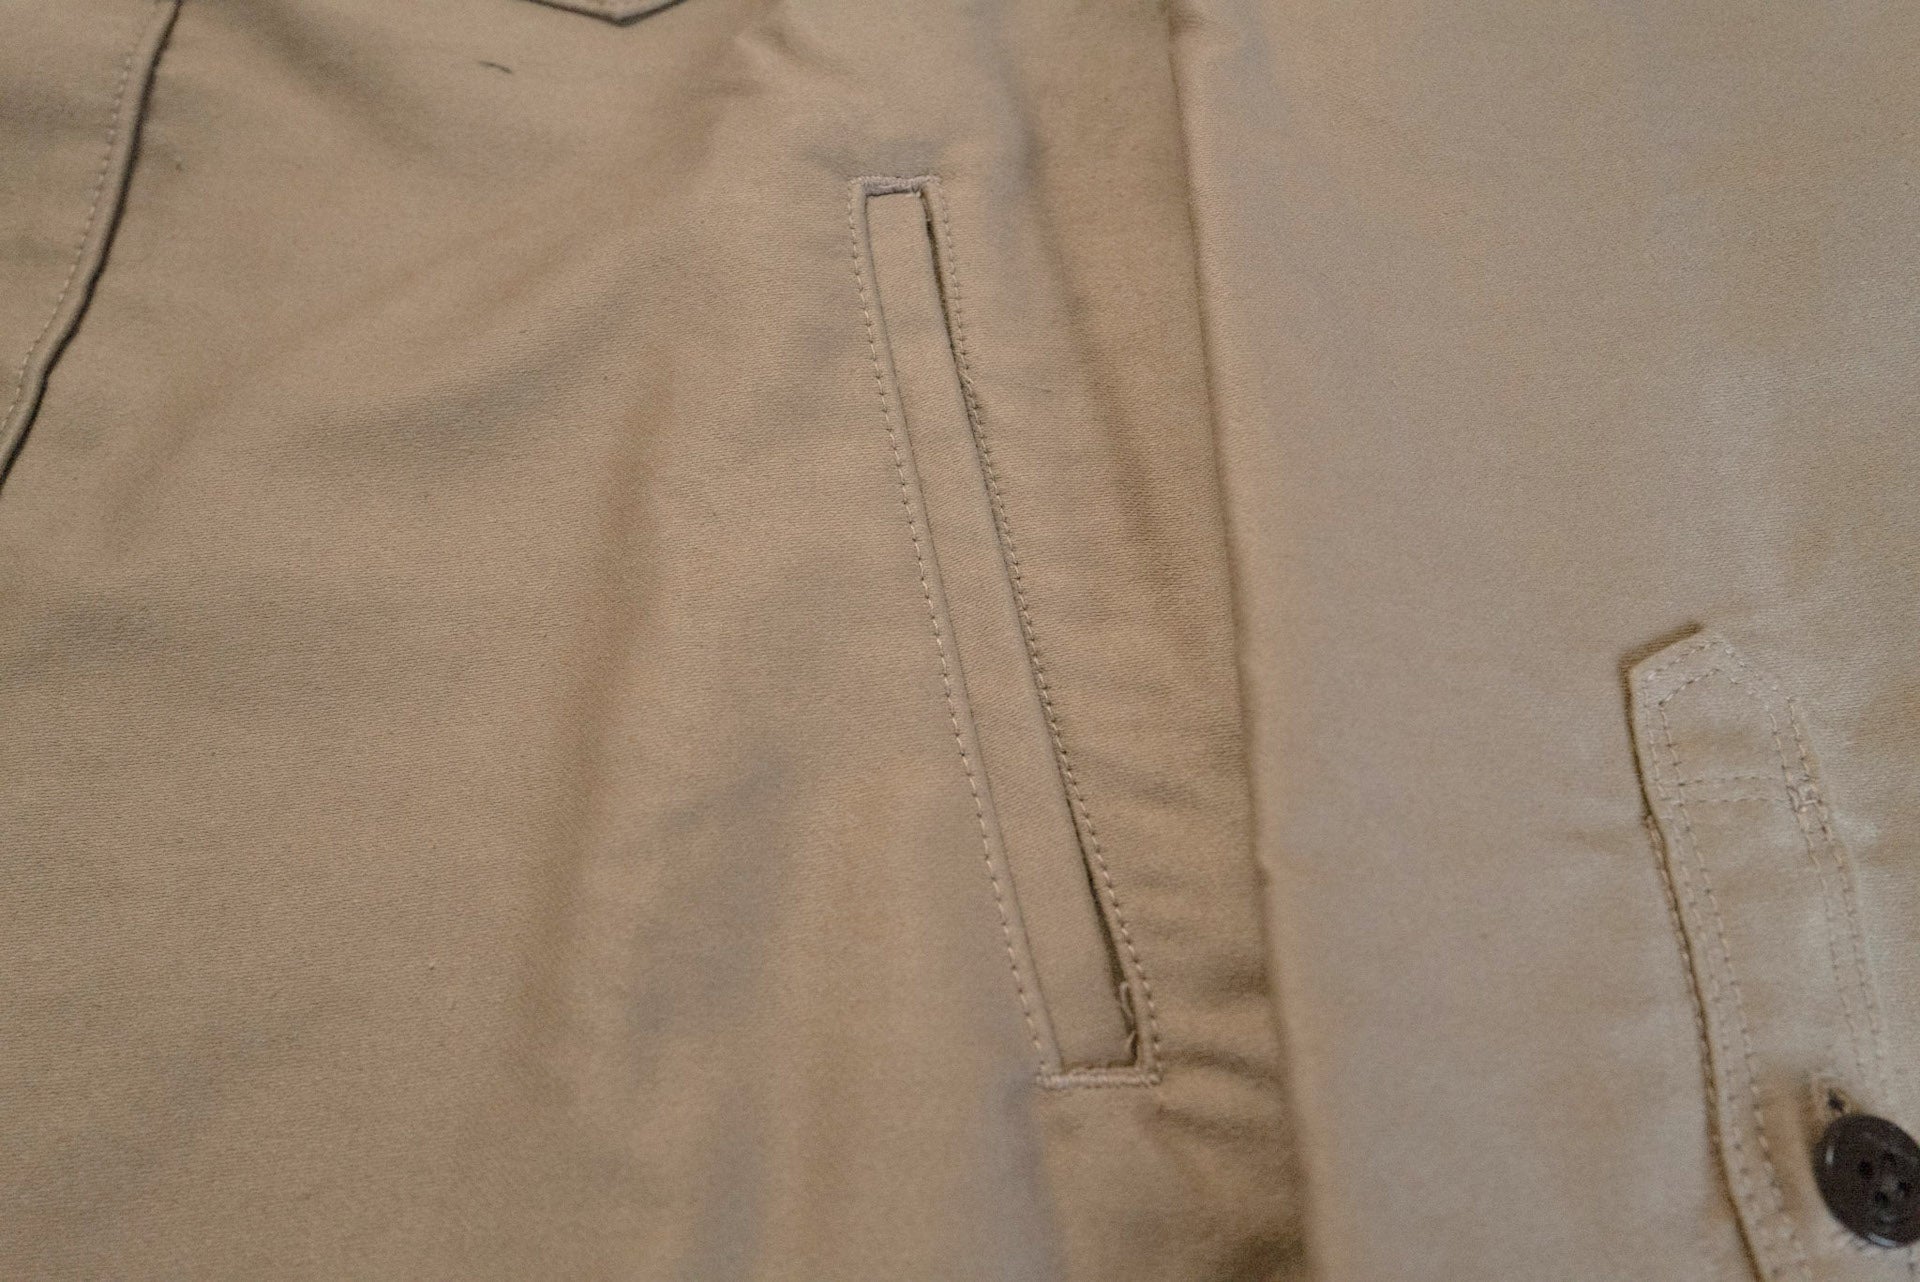 Unique Garment 'Deck Master' Moleskin C.P.O Jacketed Shirt (Sand Beige)